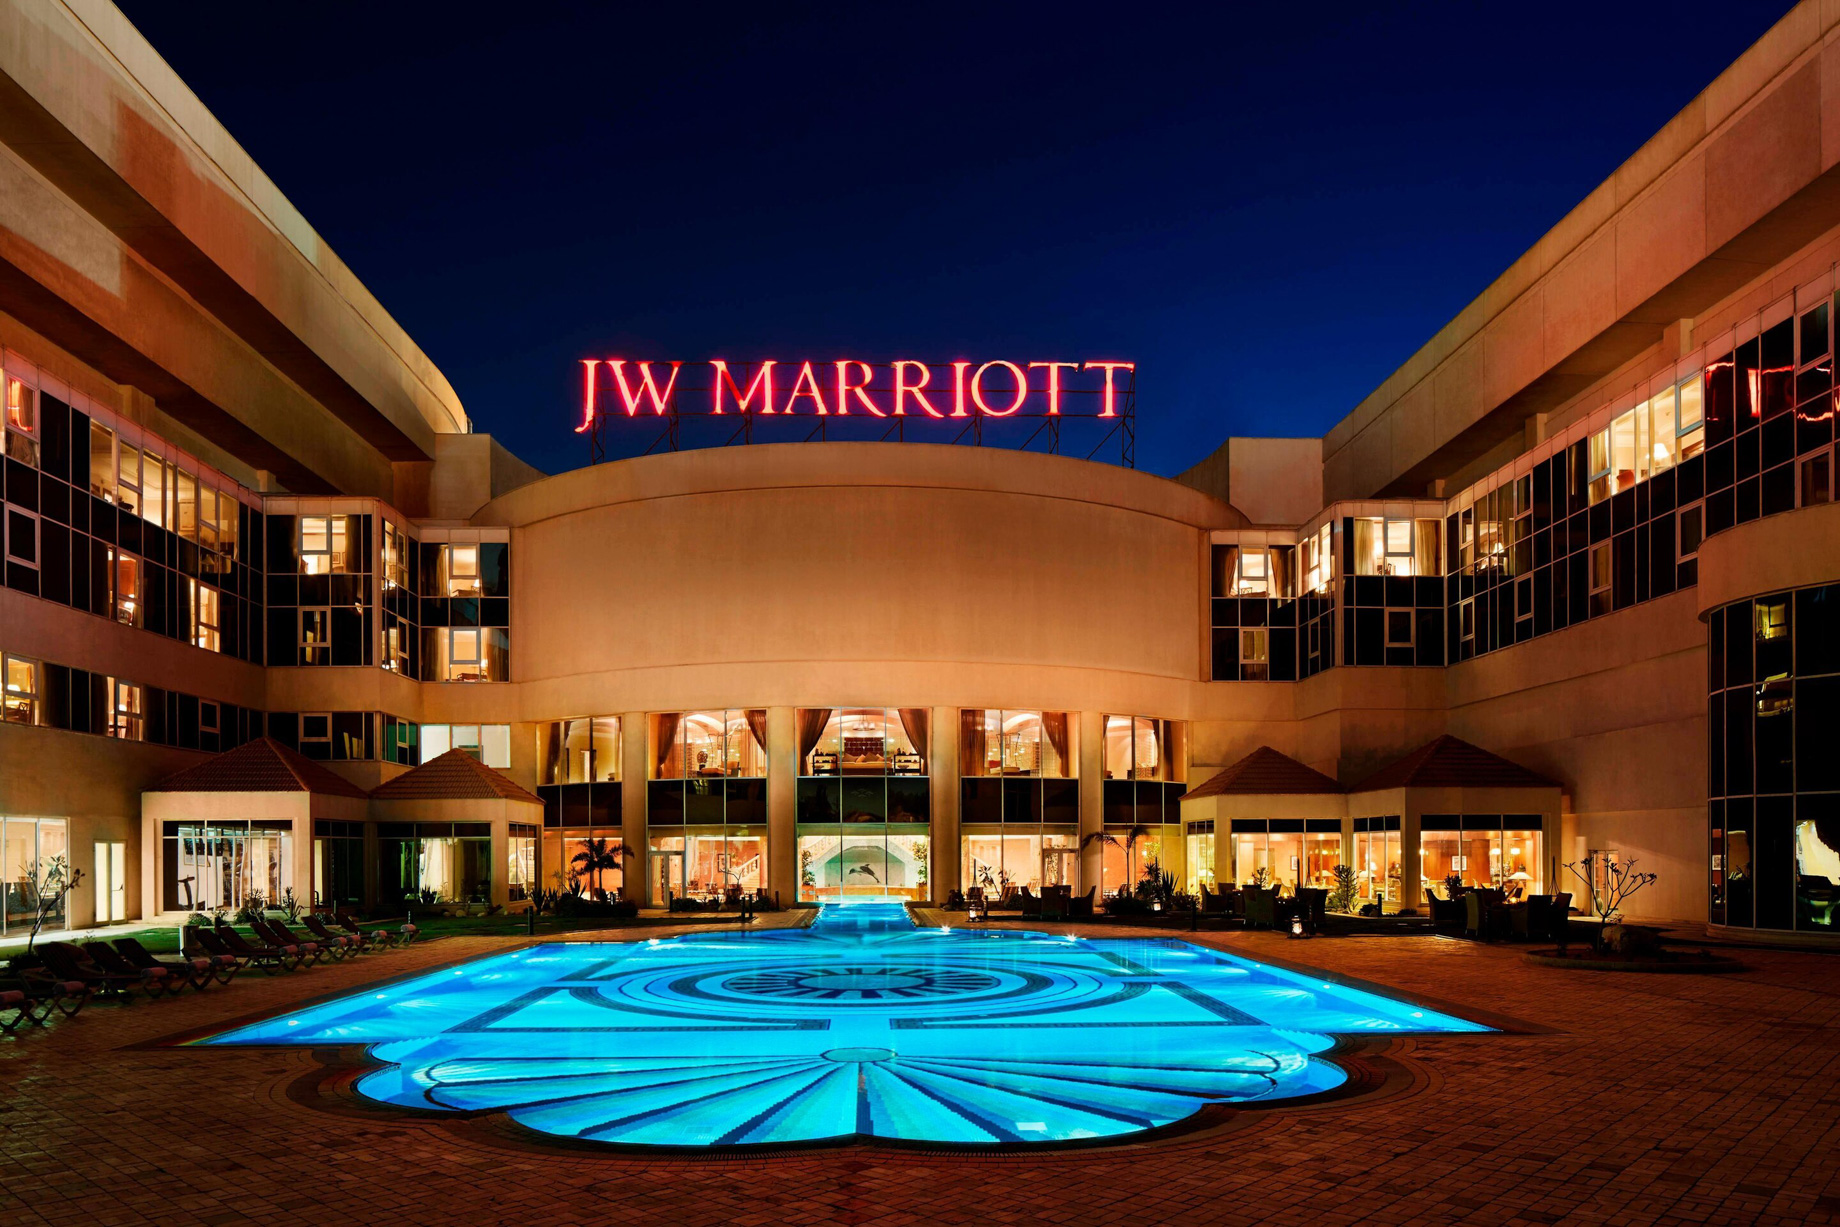 JW Marriott Hotel Cairo - Cairo, Egypt - Outdoor and Indoor Pool Night